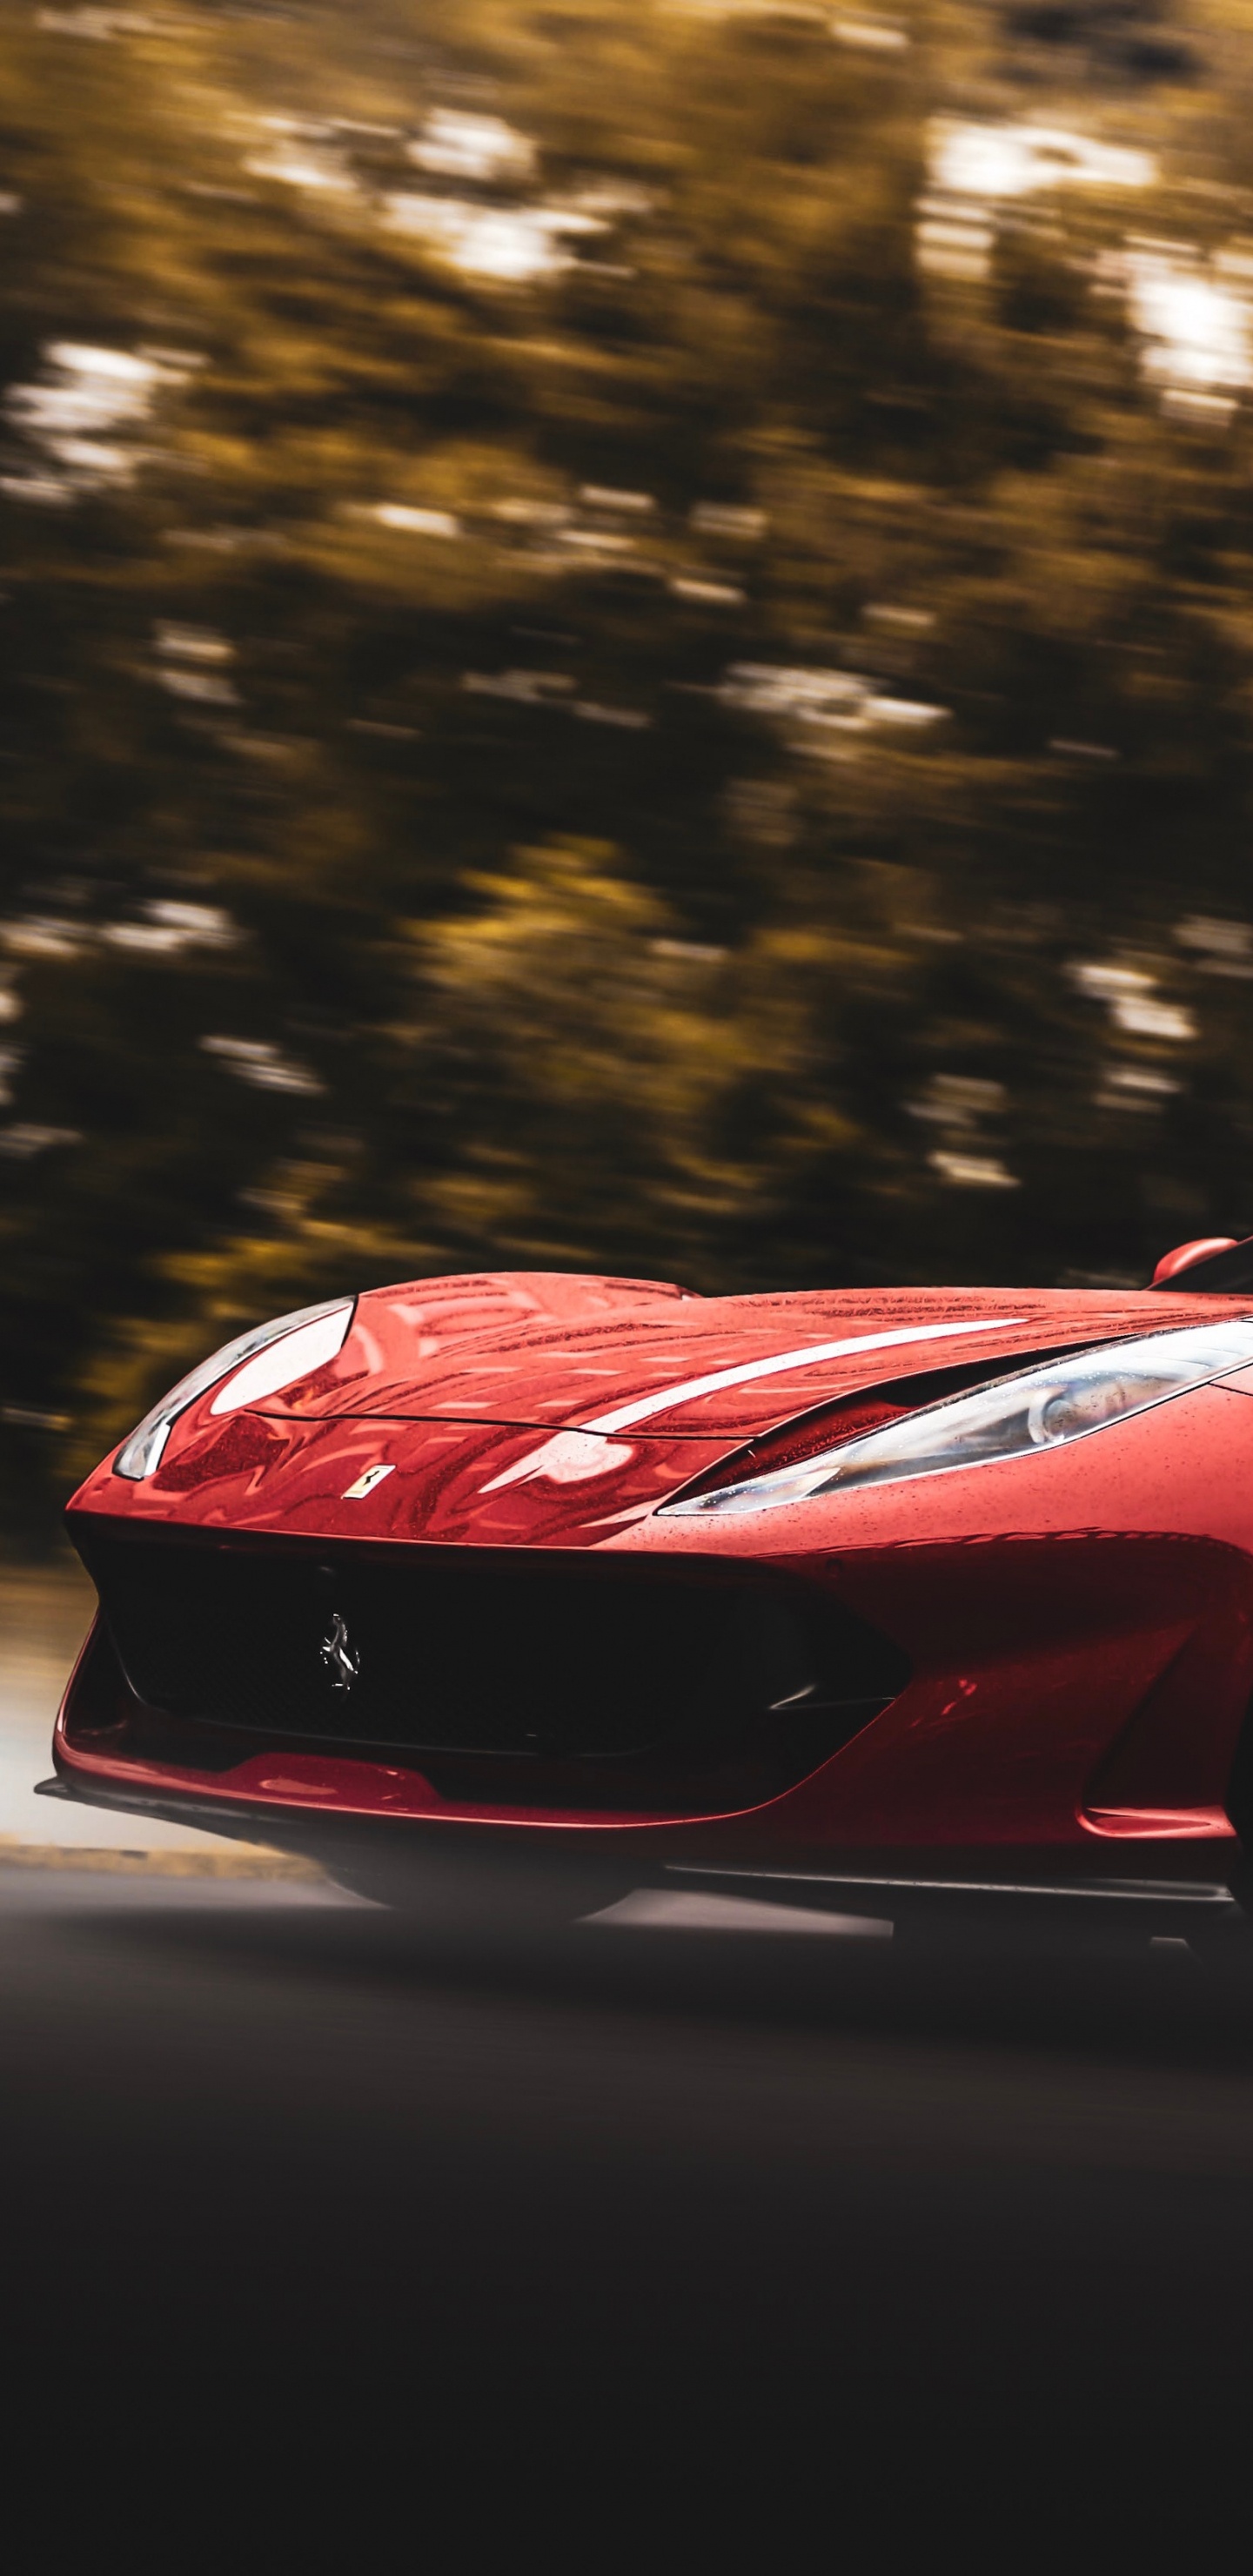 Ferrari Rouge 458 Italia Sur Route Pendant la Journée. Wallpaper in 1440x2960 Resolution